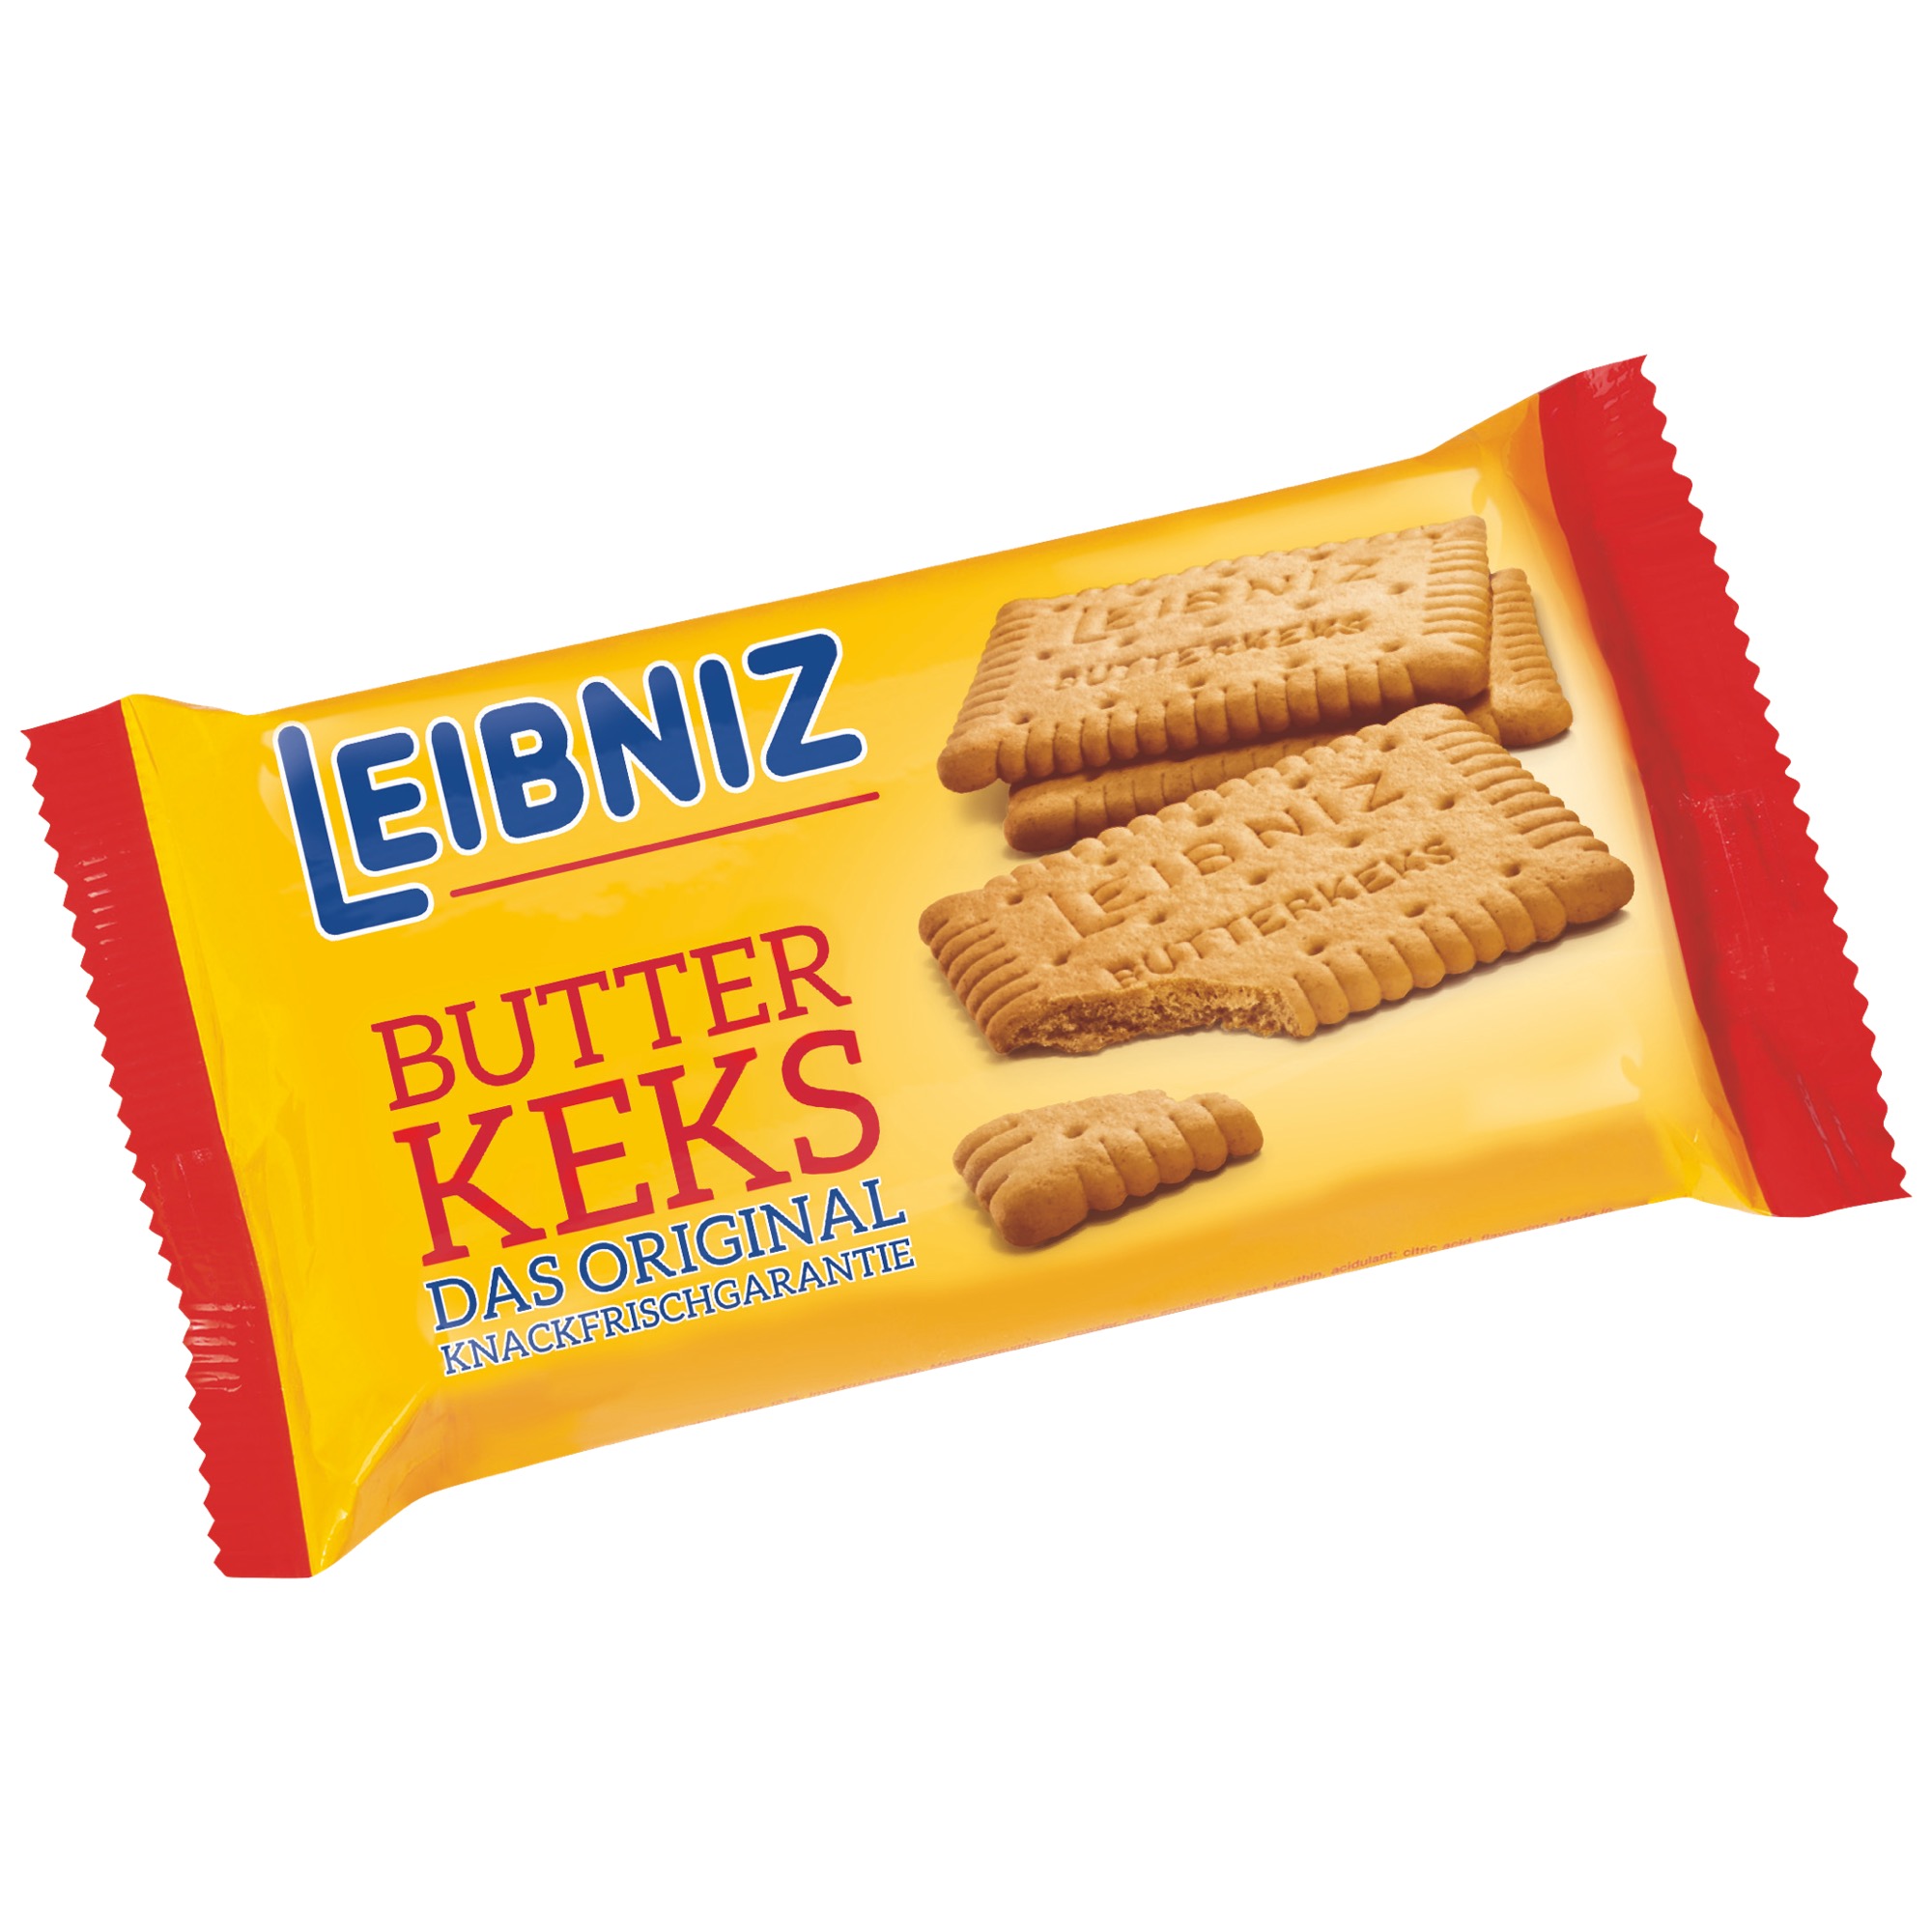 Leibniz maslové keksy 5ks 50g